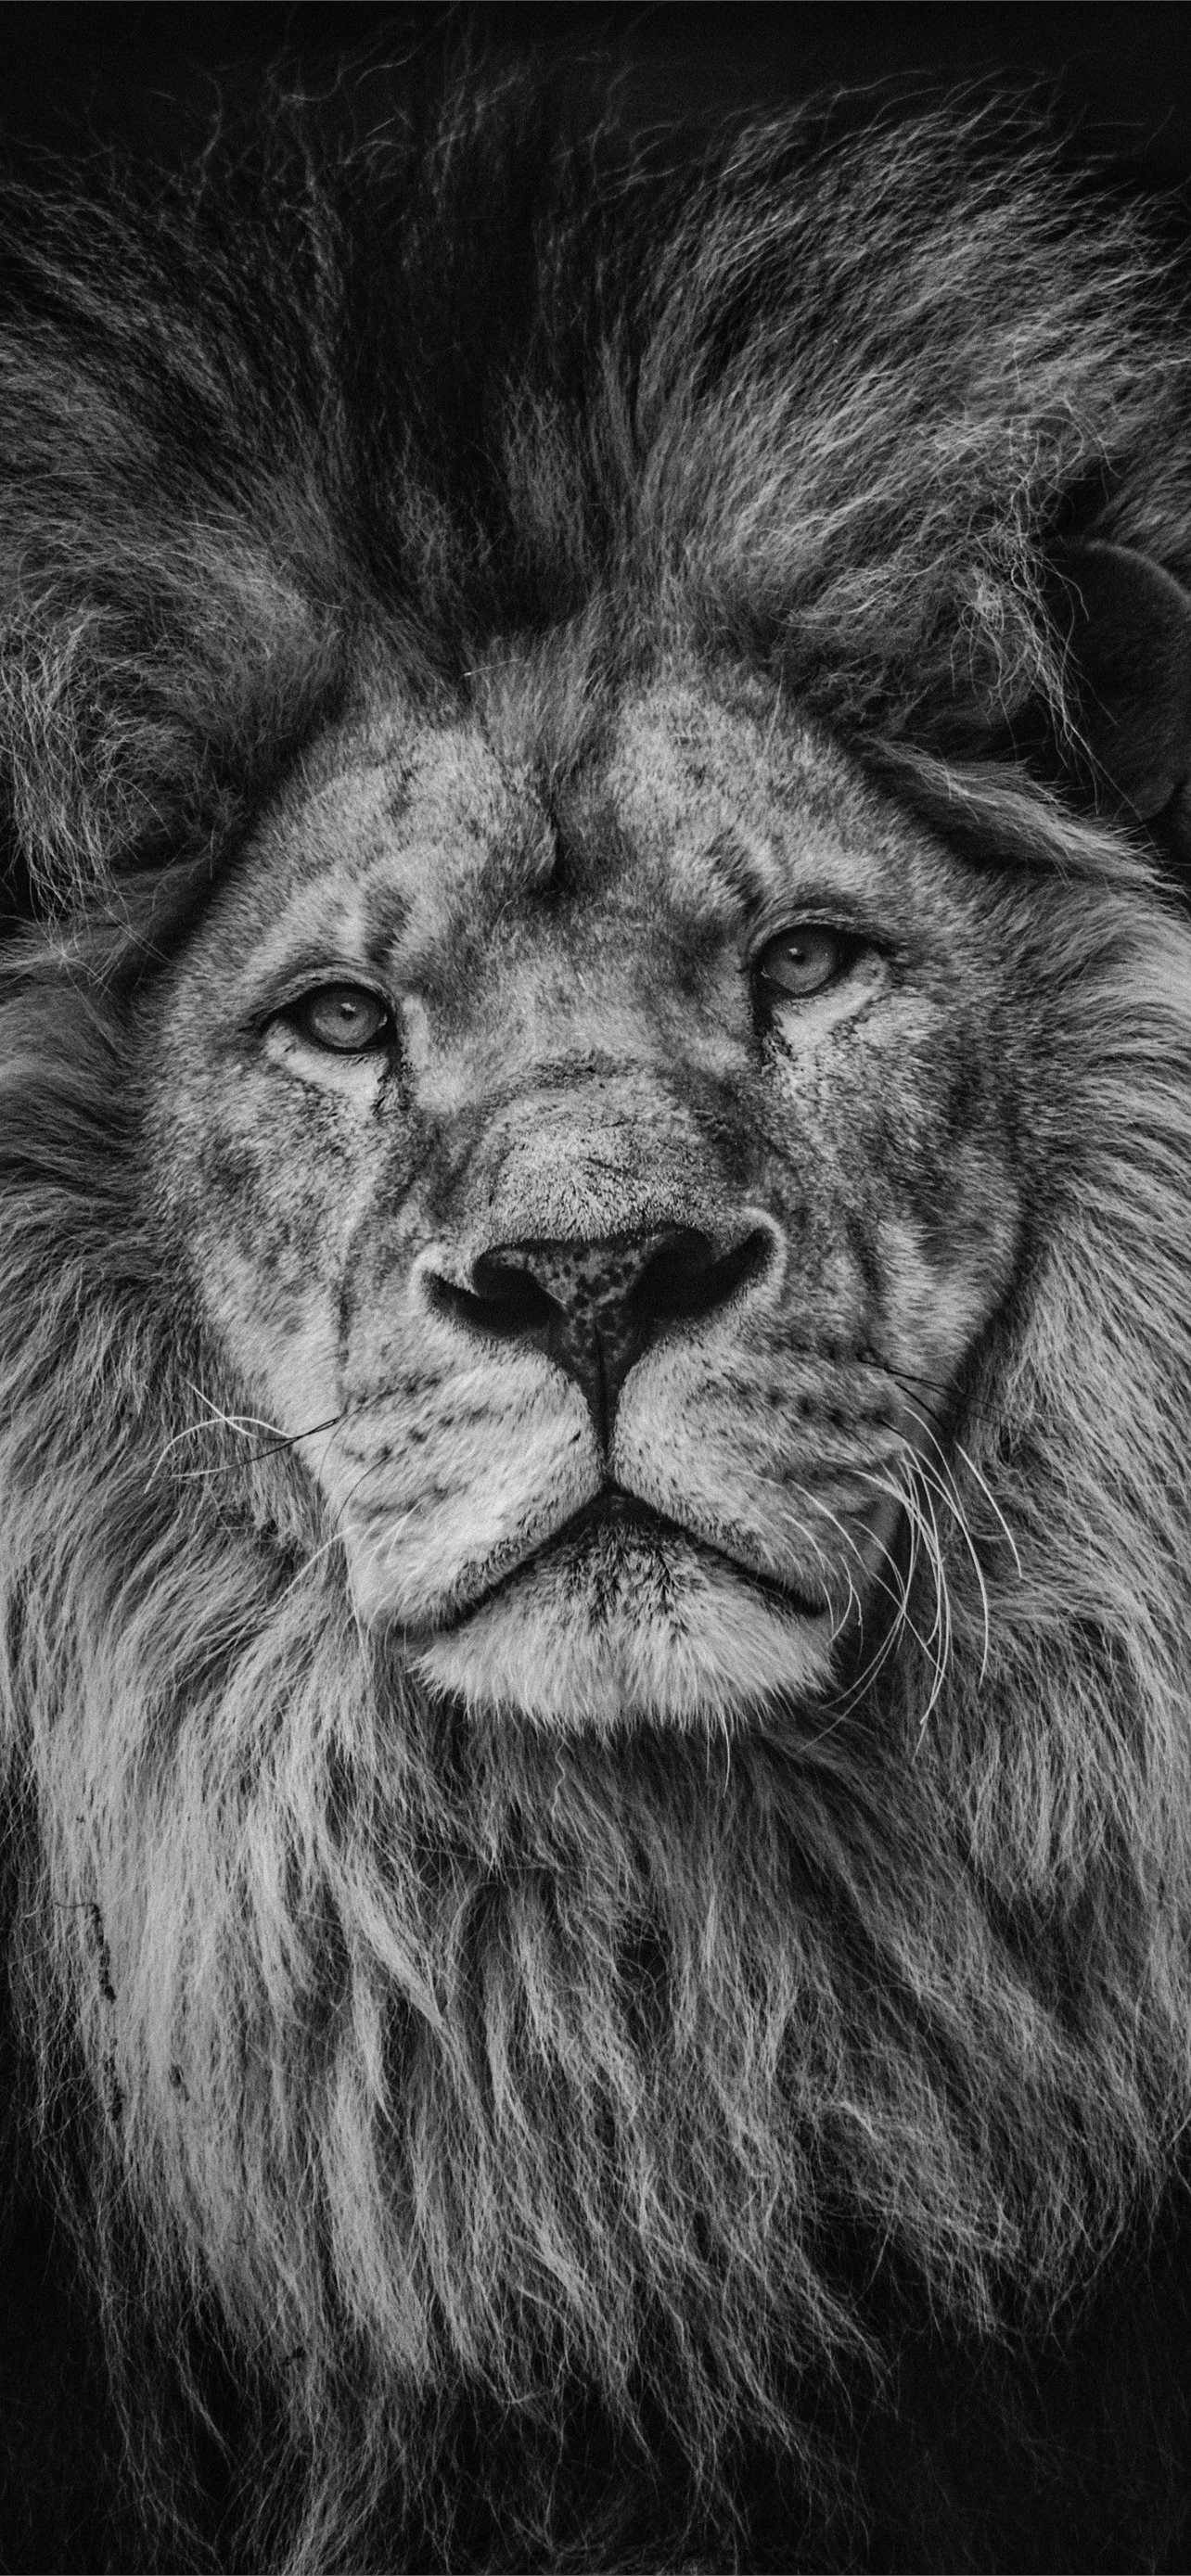 Lion Lock Screen iPhone Wallpaper Free Download